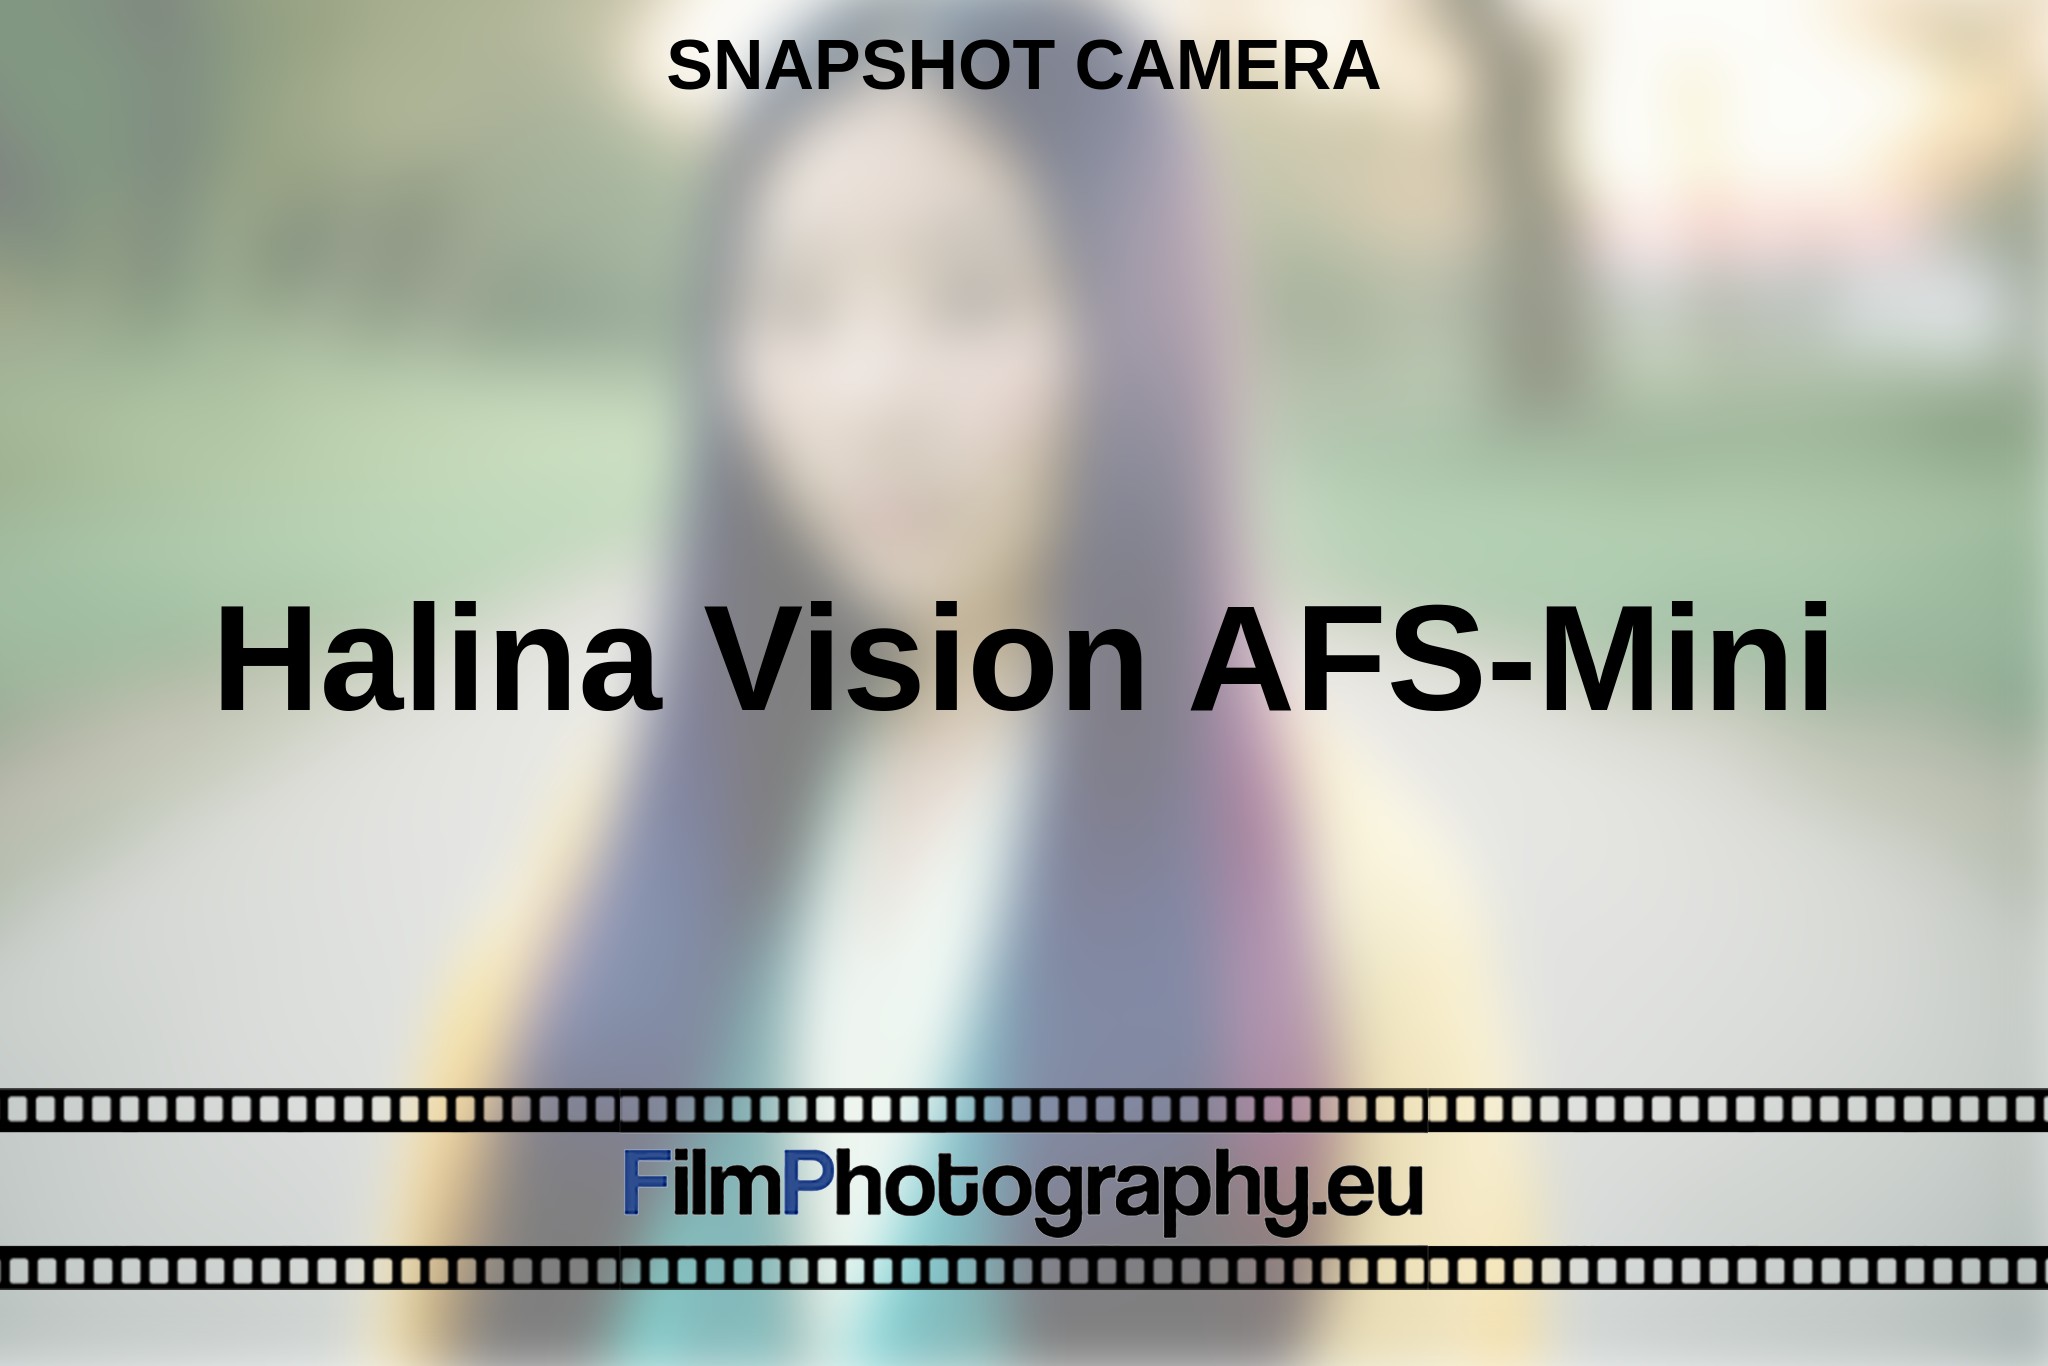 halina-vision-afs-mini-snapshot-camera-en-bnv.jpg